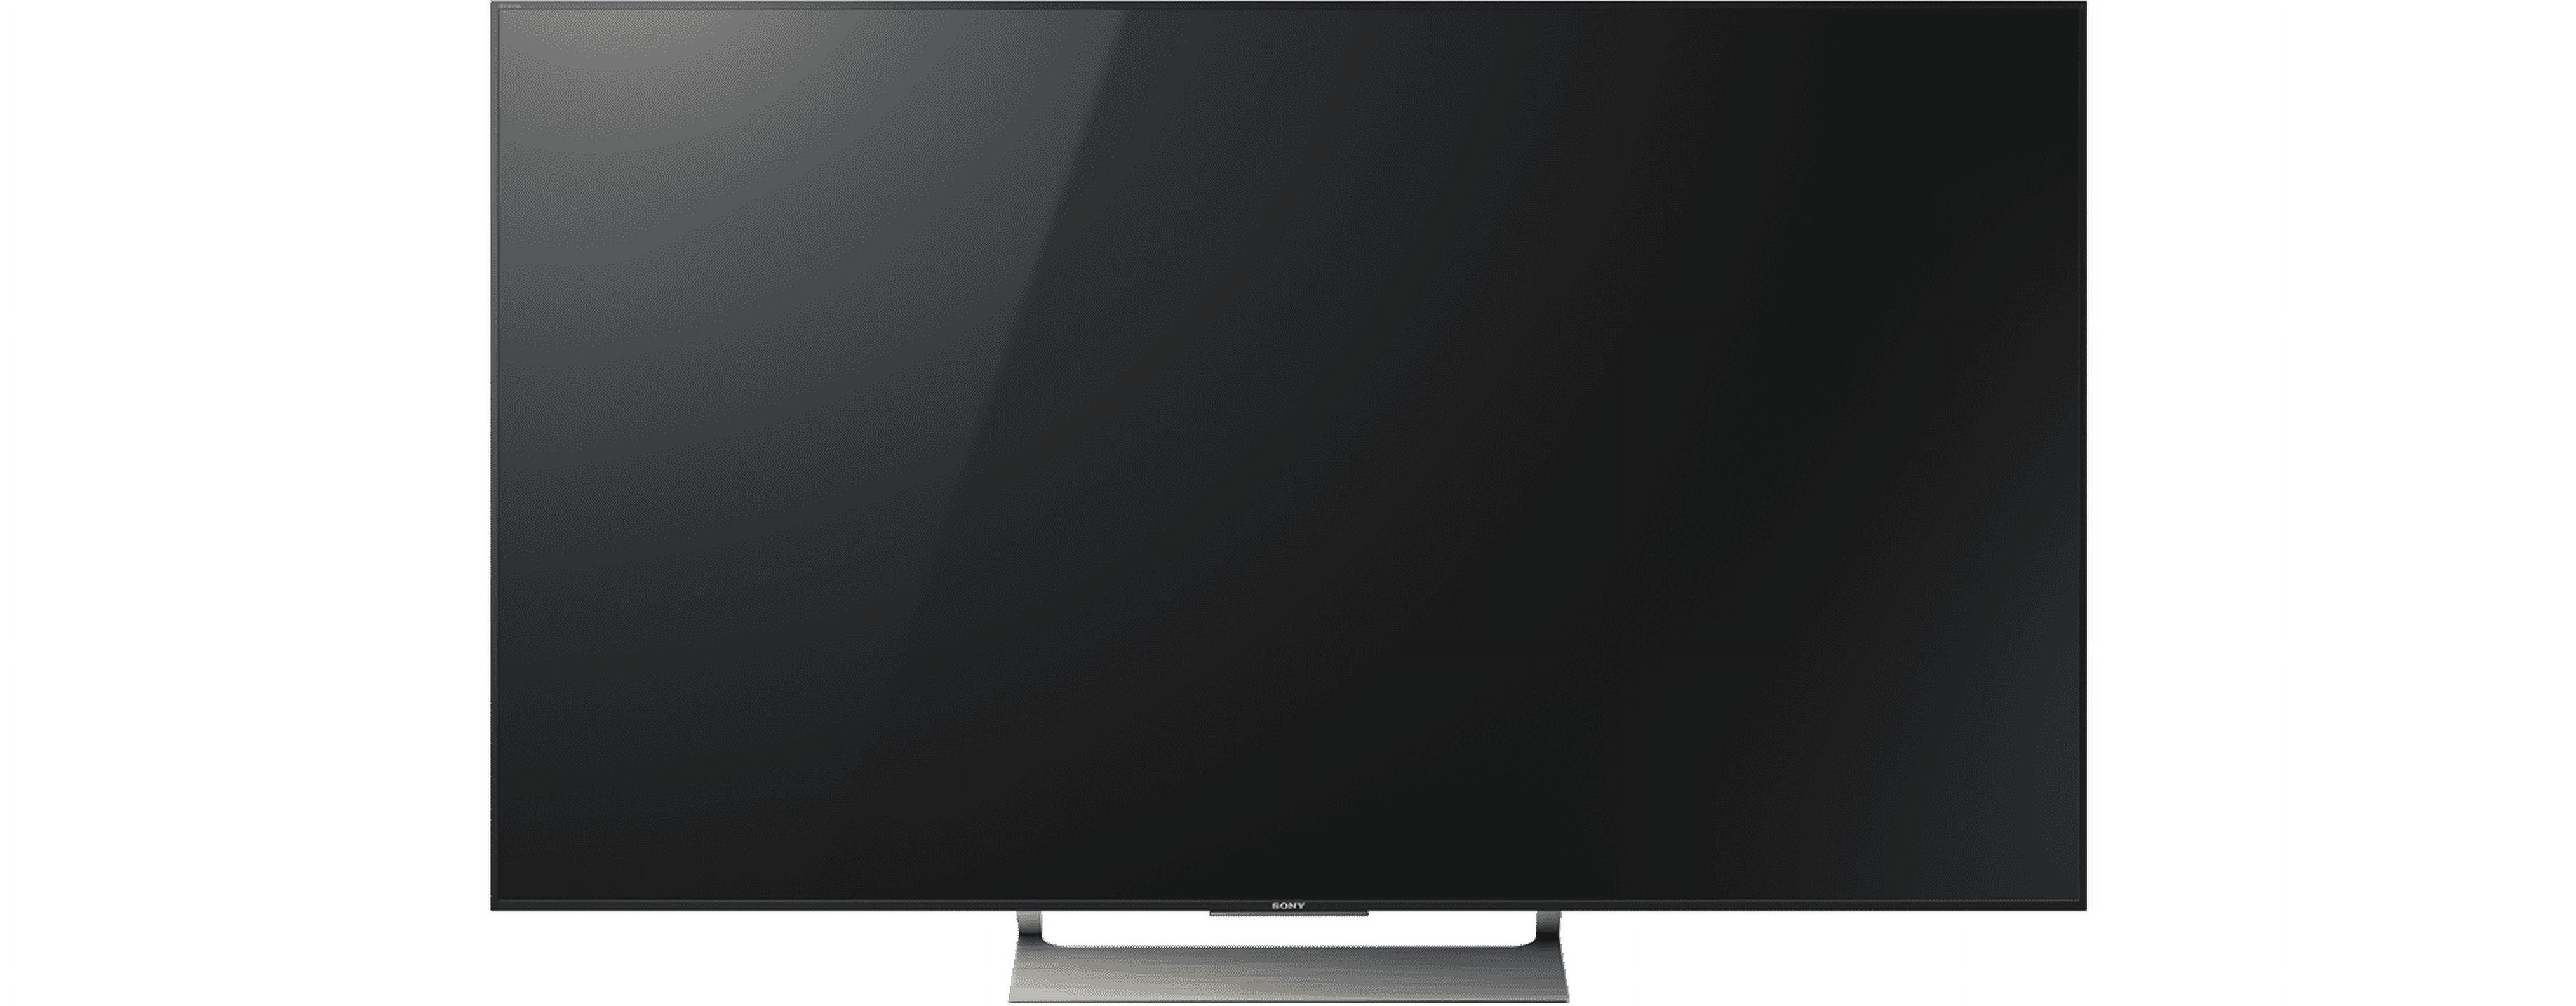 Sony 75" Class 4K (2160P) Smart LED TV (XBR75X900E) - image 1 of 9